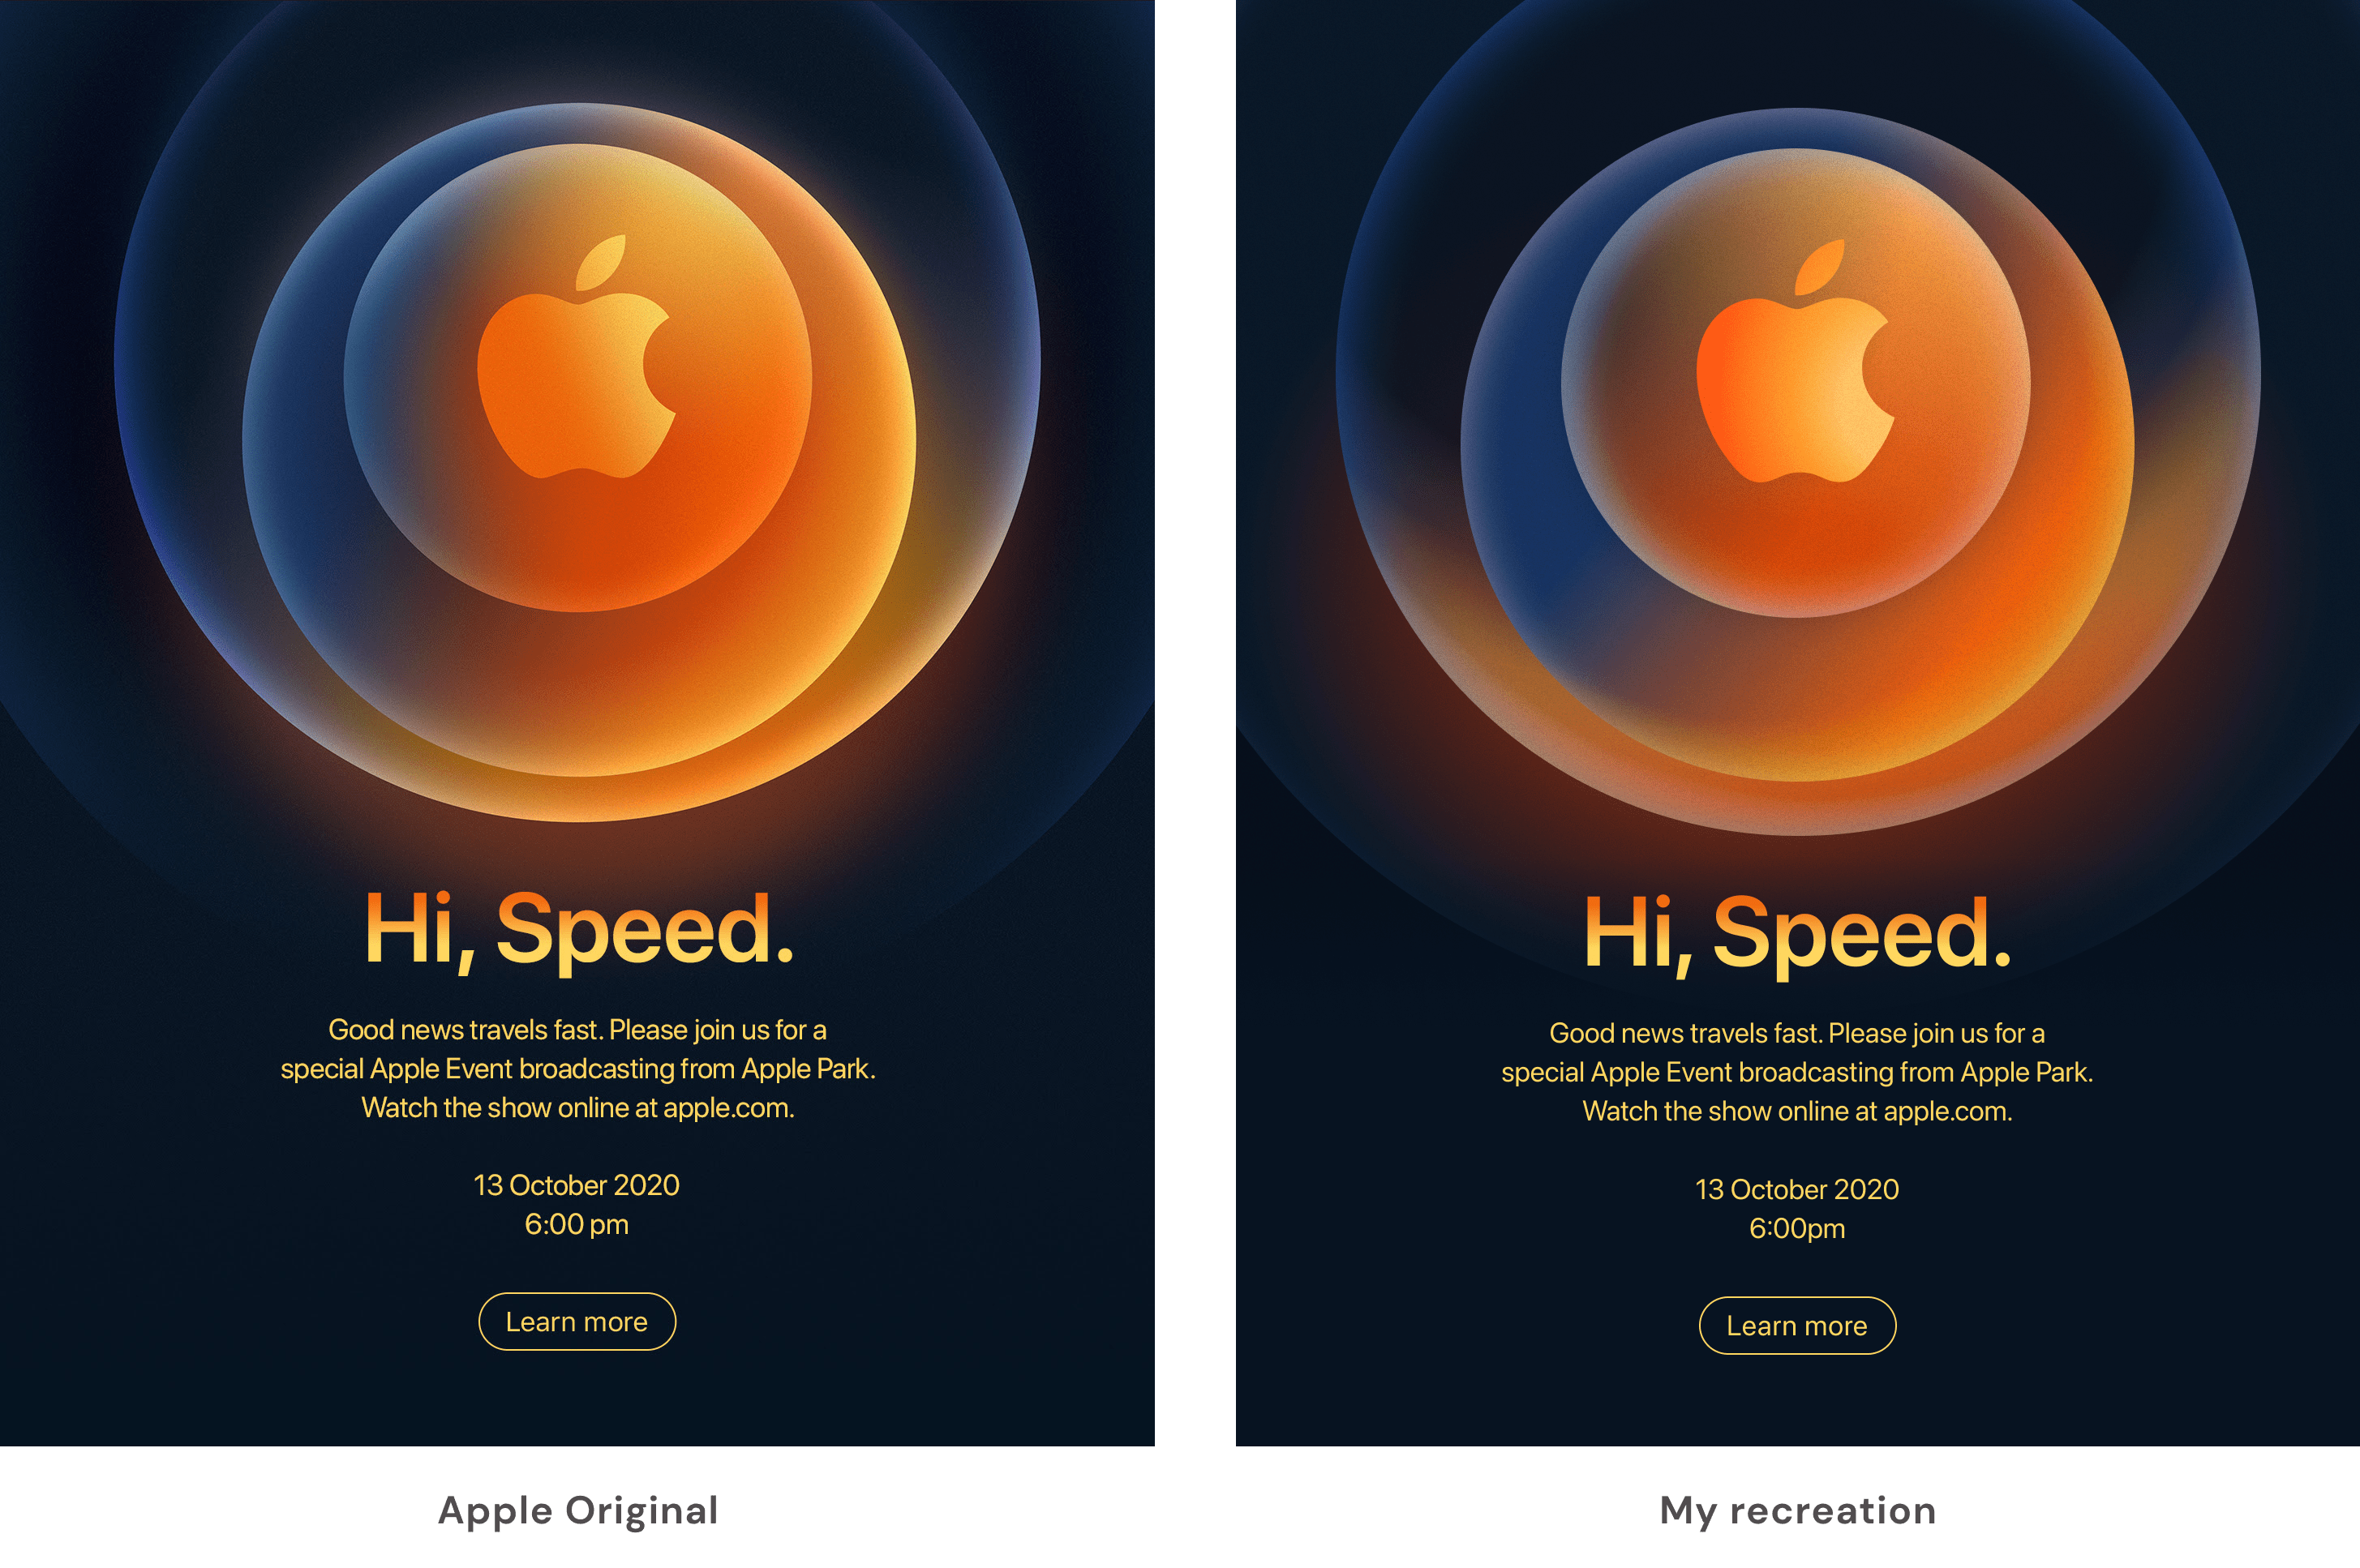 Comparison of the Apple event invite and my Figma recreation